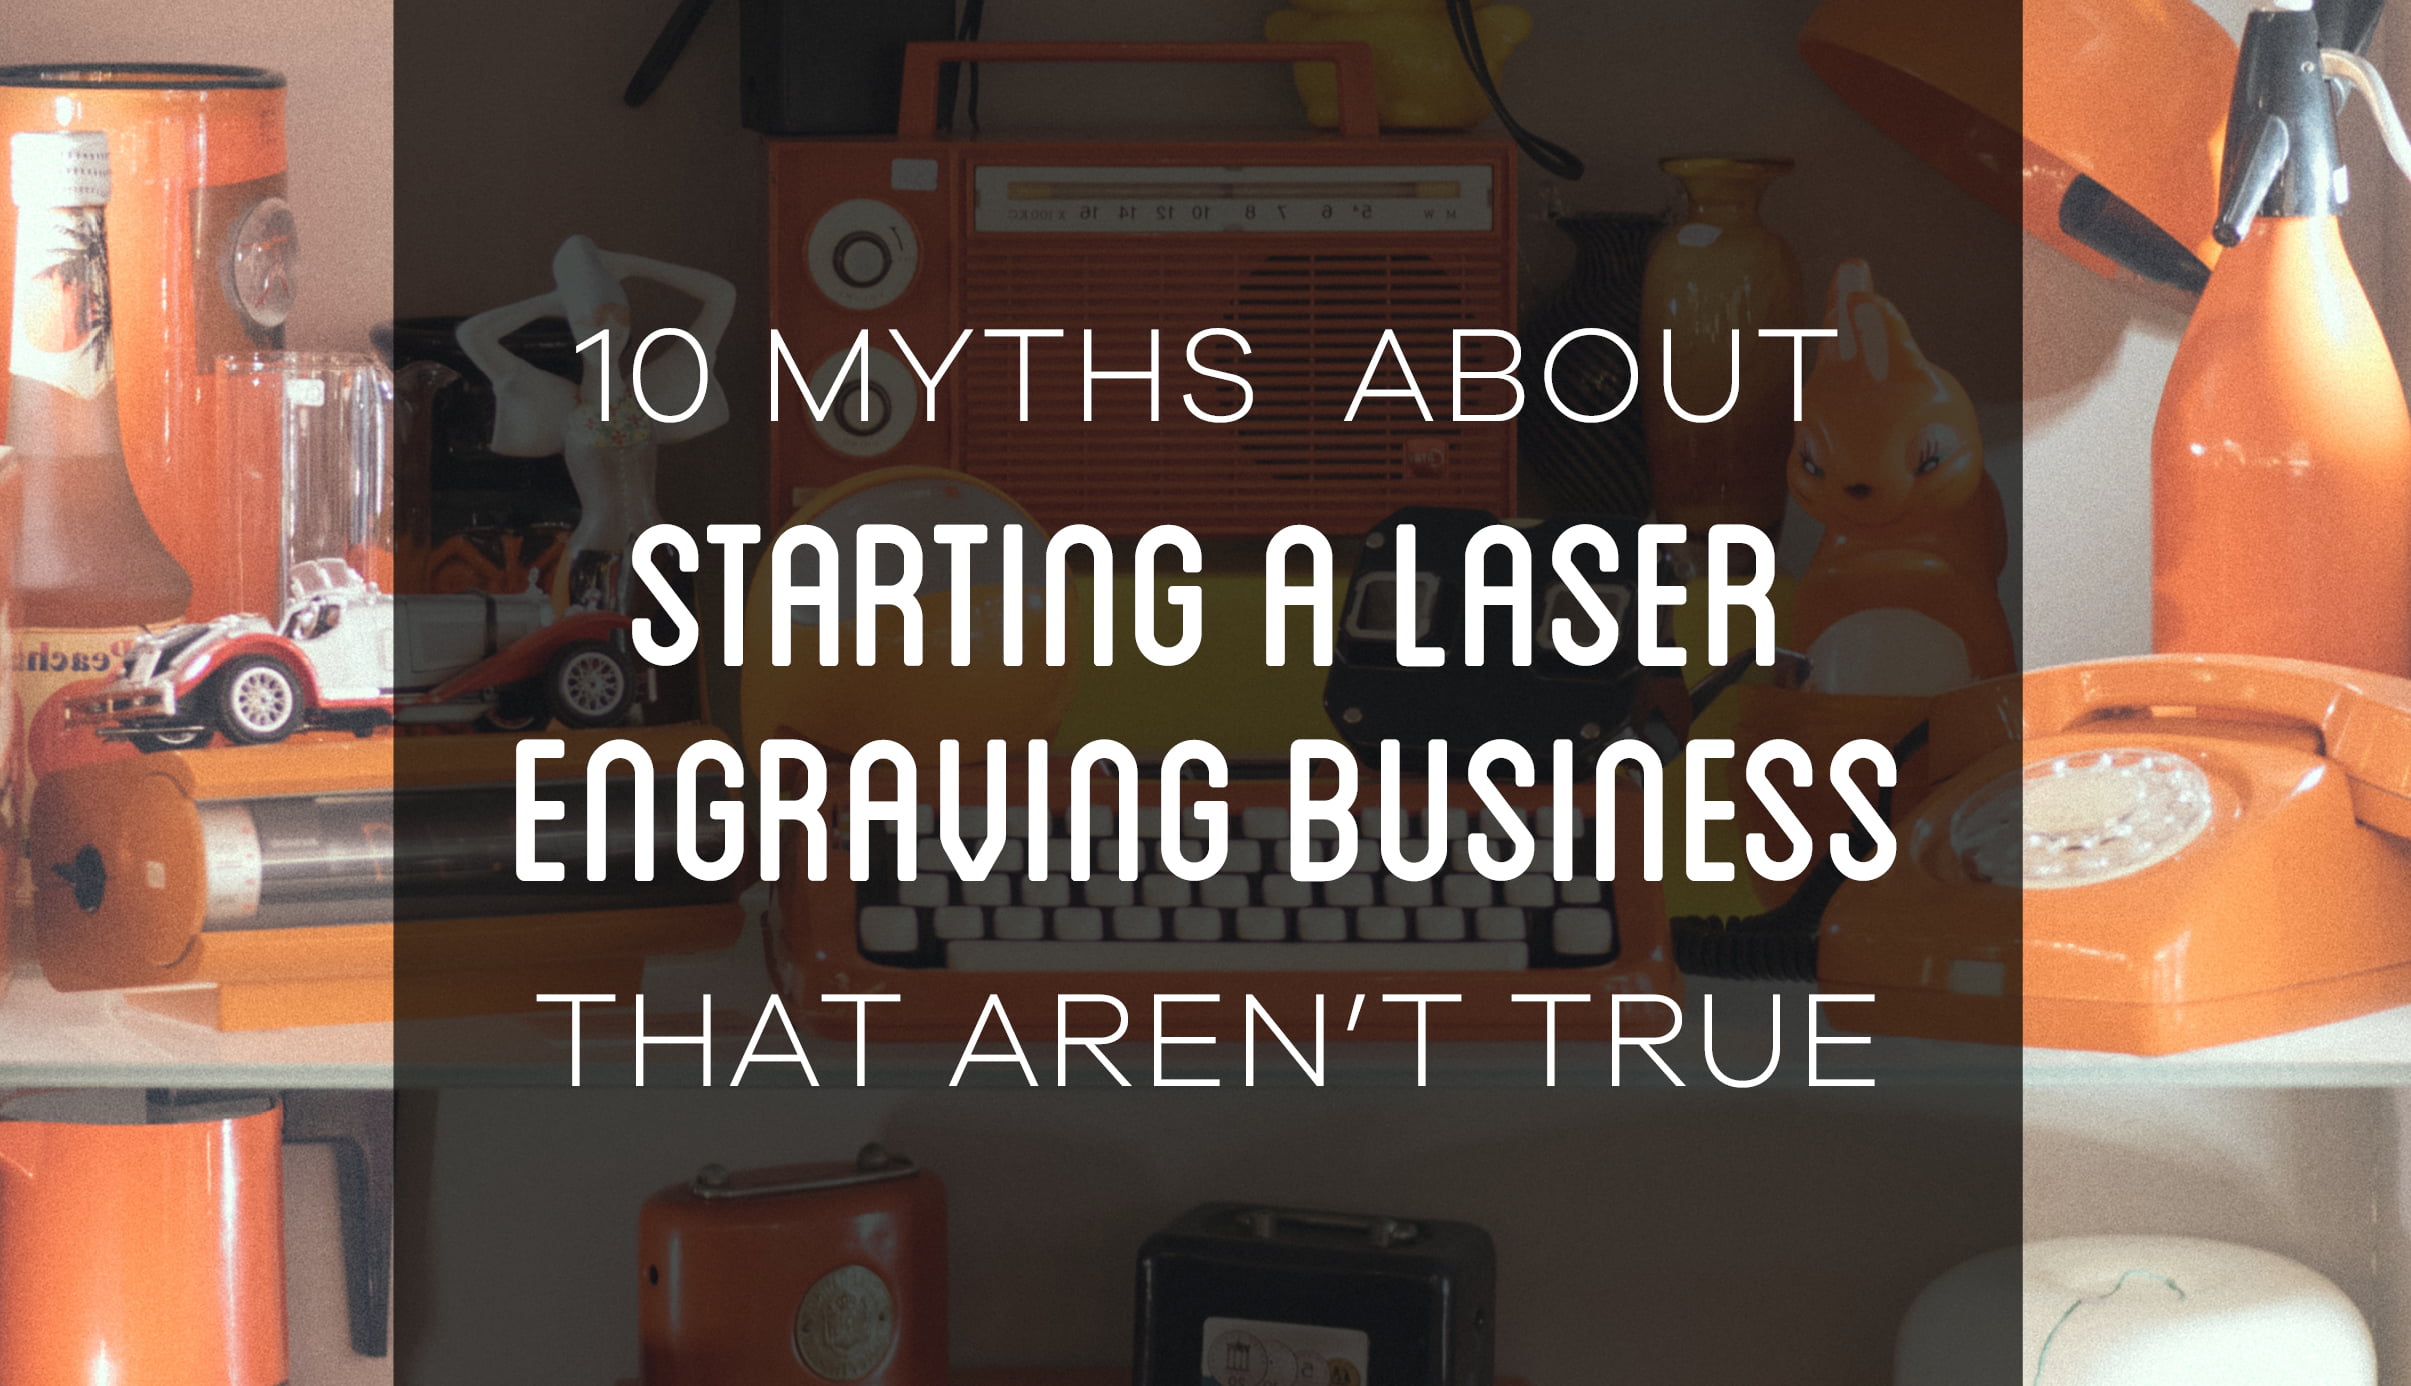 Feasibility væv Udseende 10 myths about starting a laser cutter & engraving business